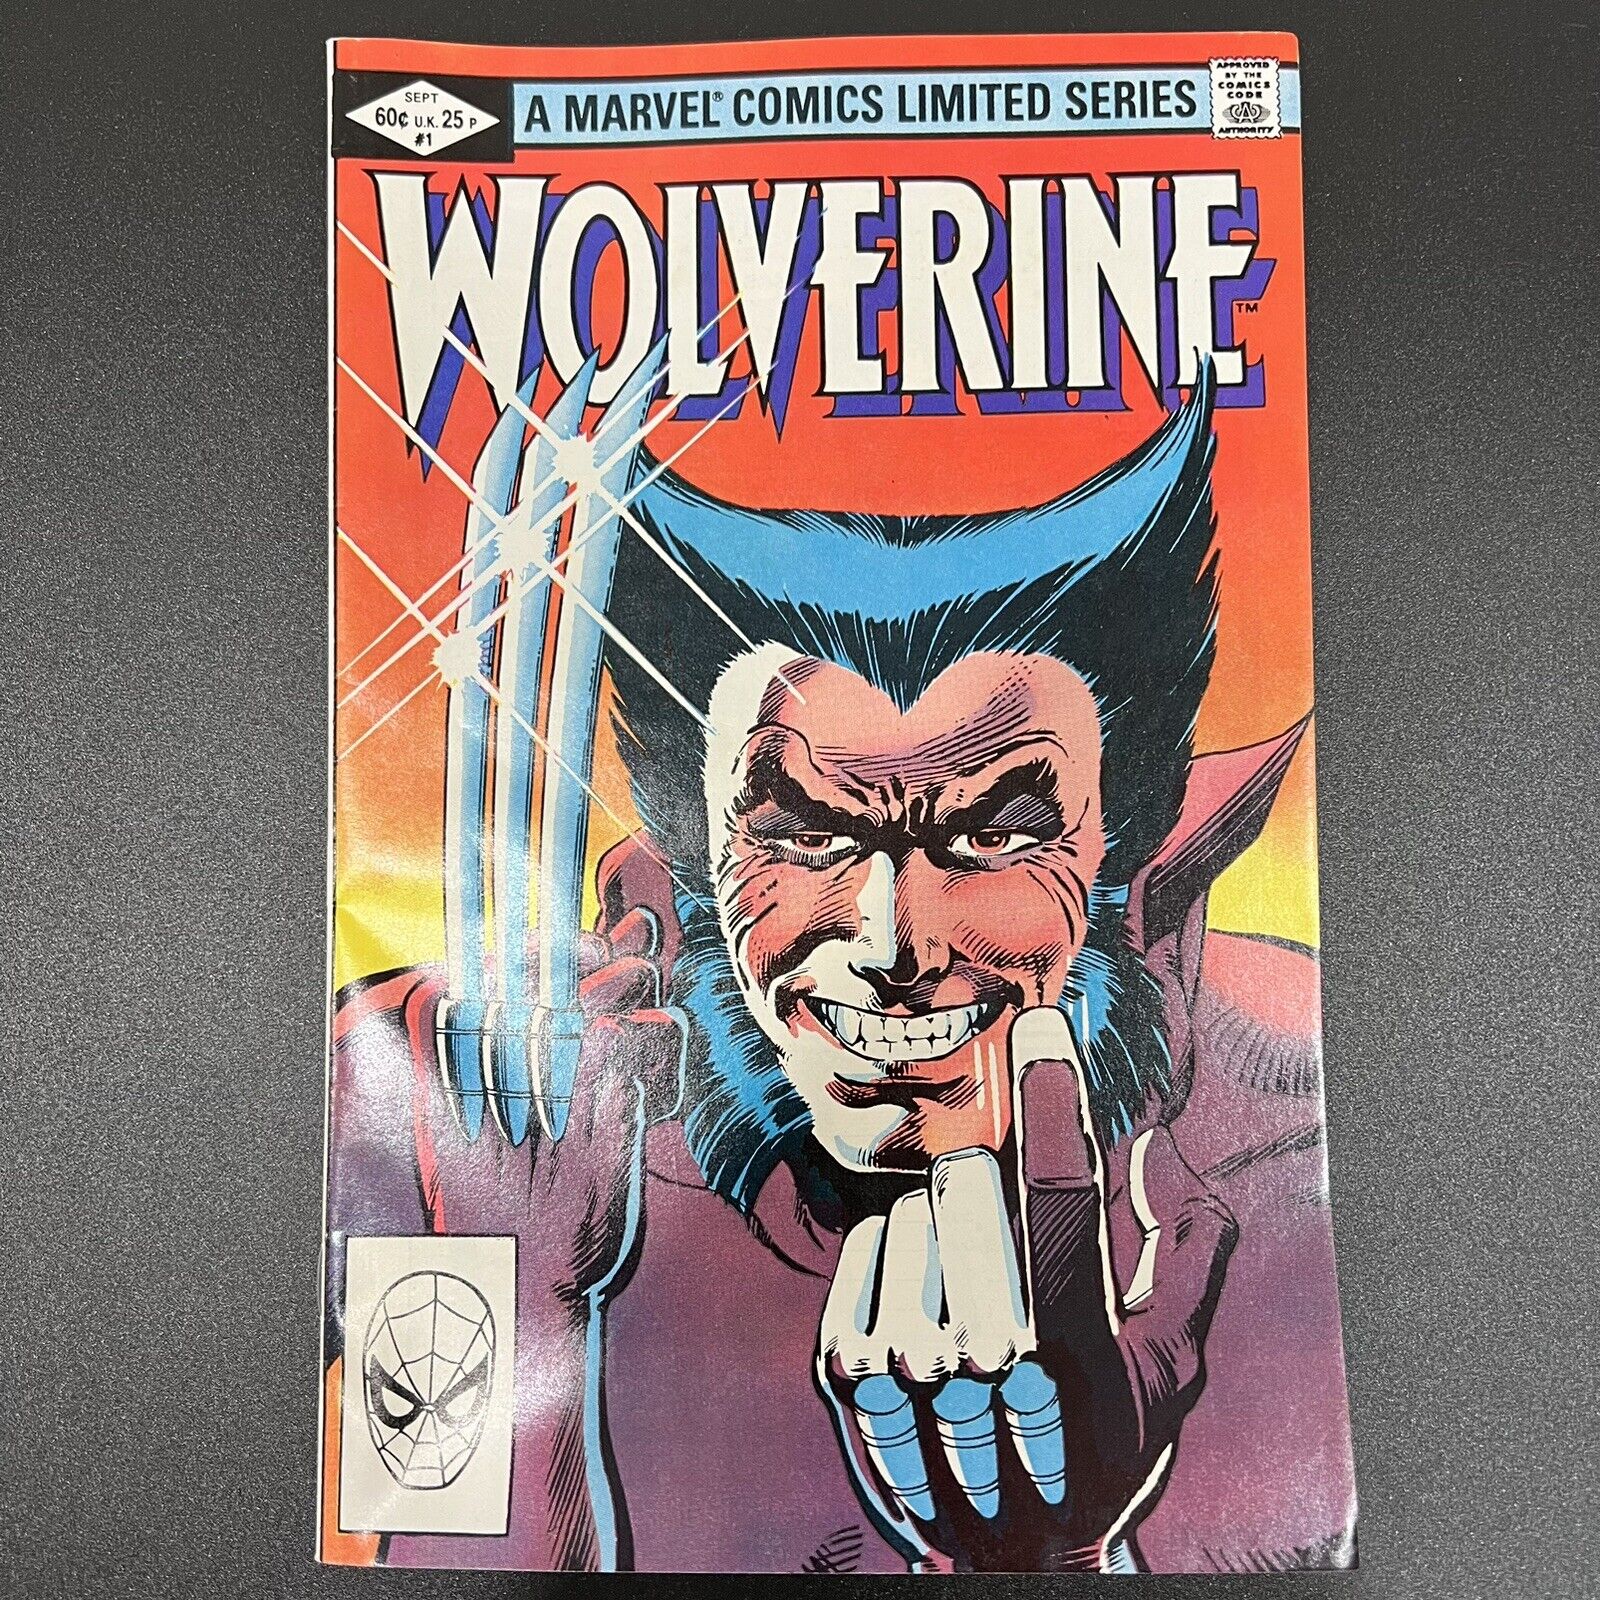 Marvel WOLVERINE Limited Series #1 (1982) - 1st SOLO Wolverine FRANK MILLER